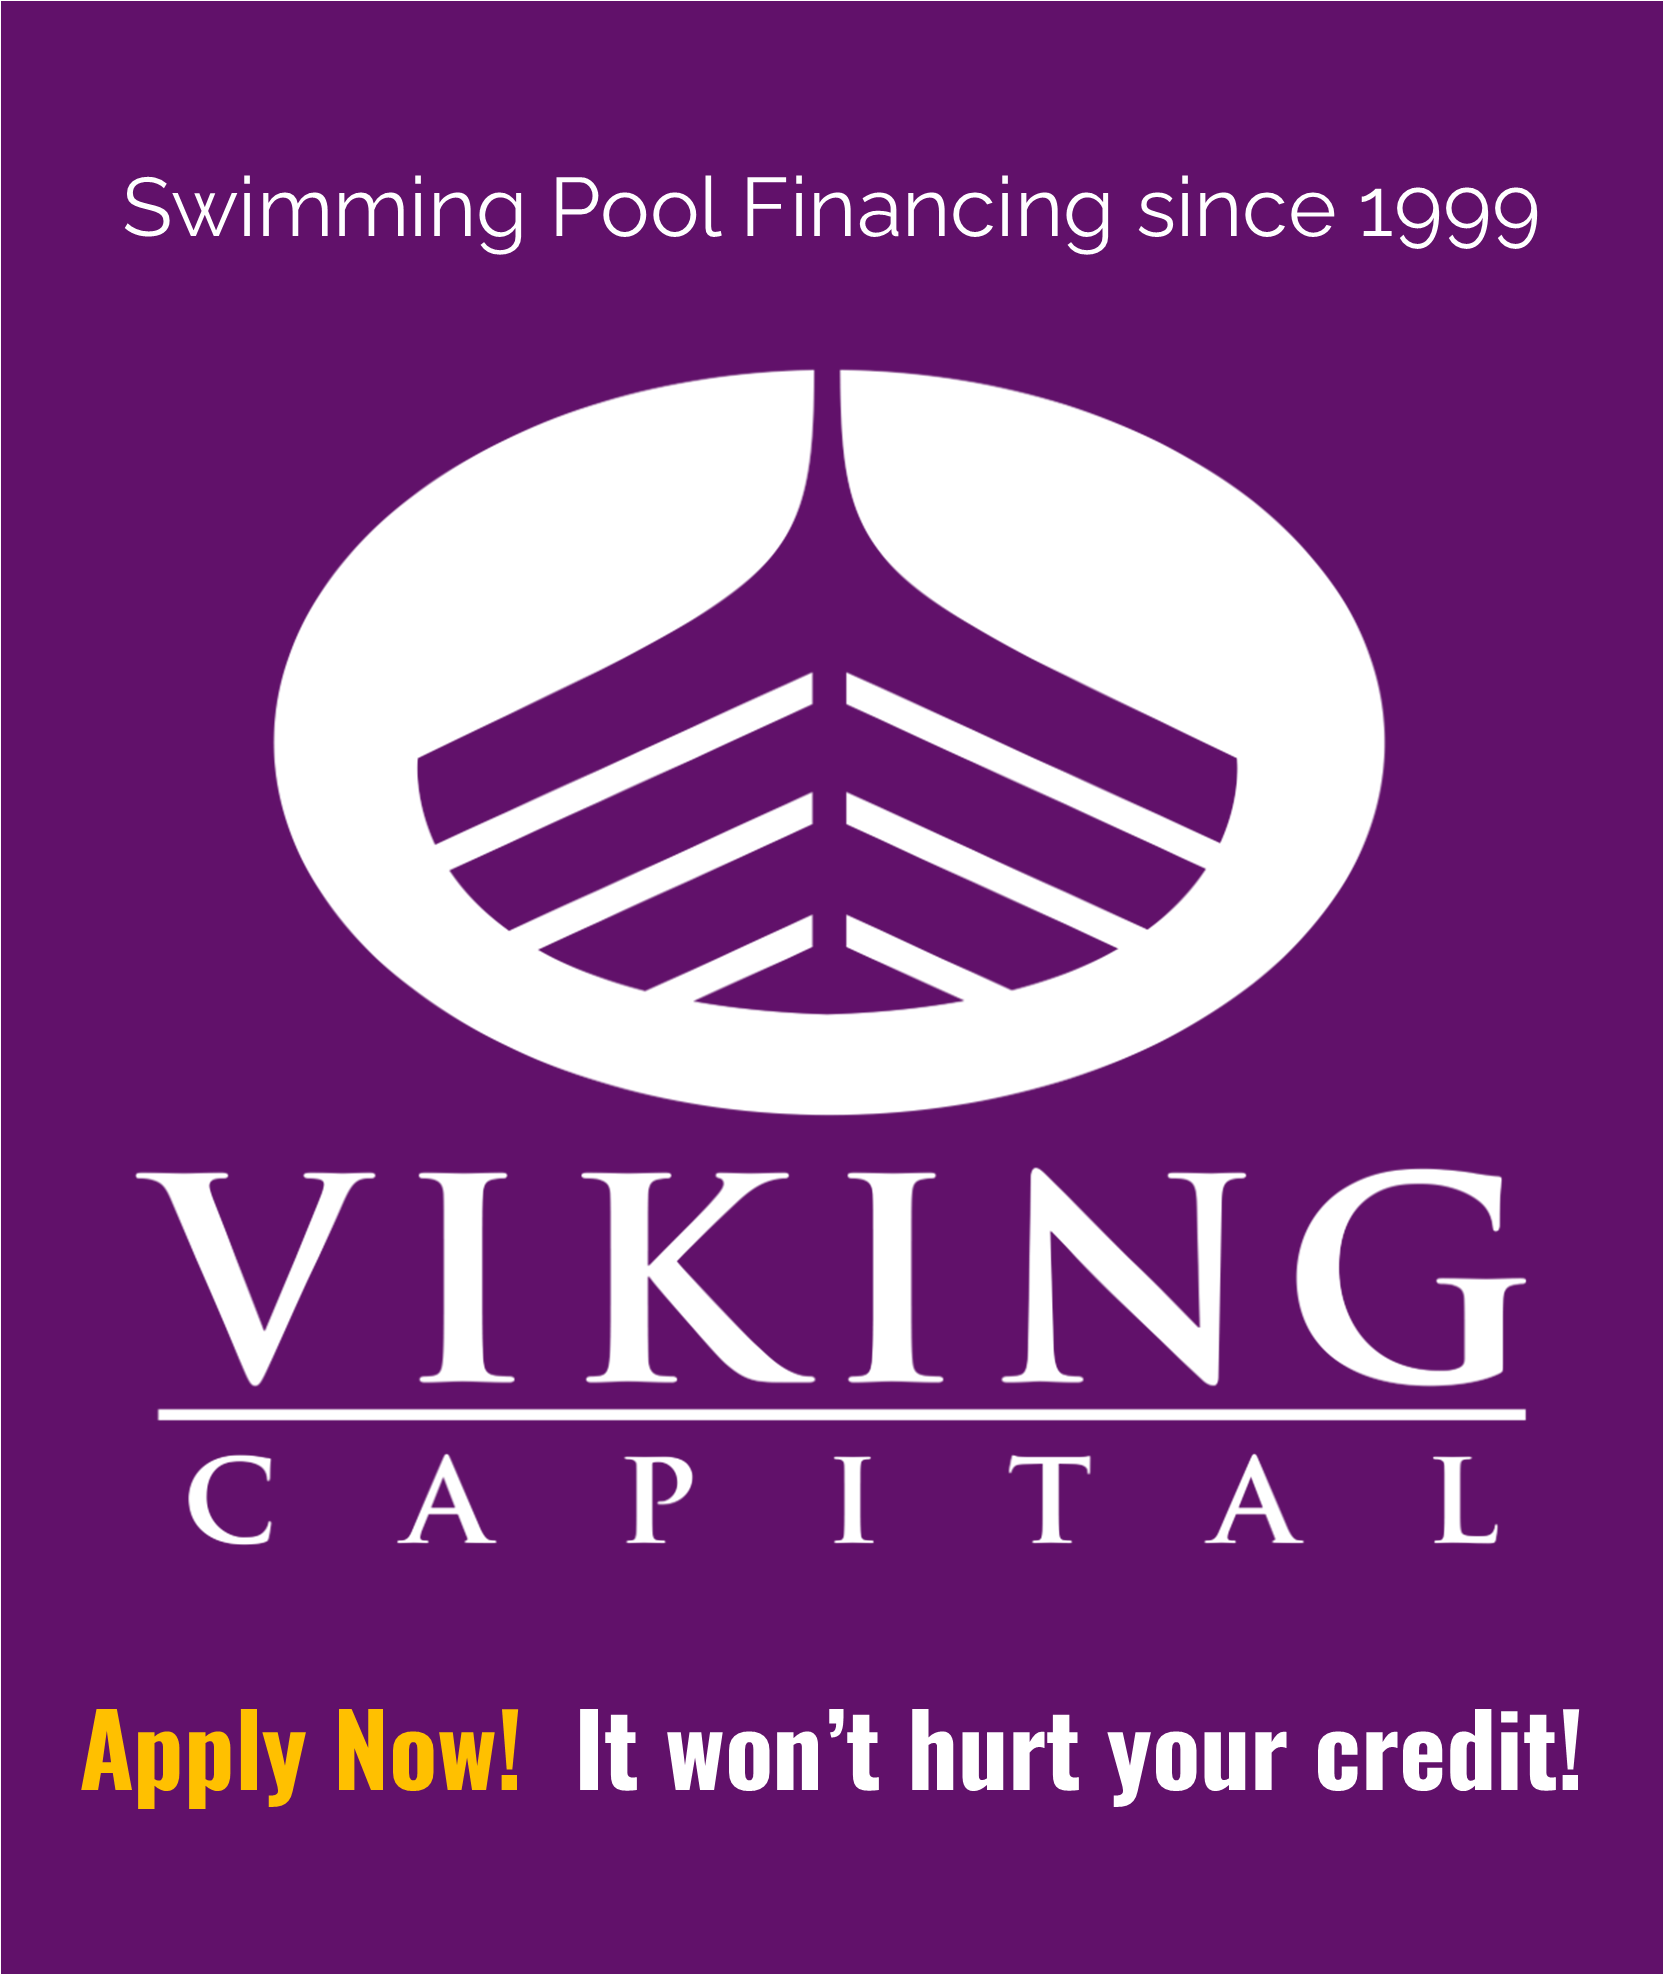 viking capitol pool financing 